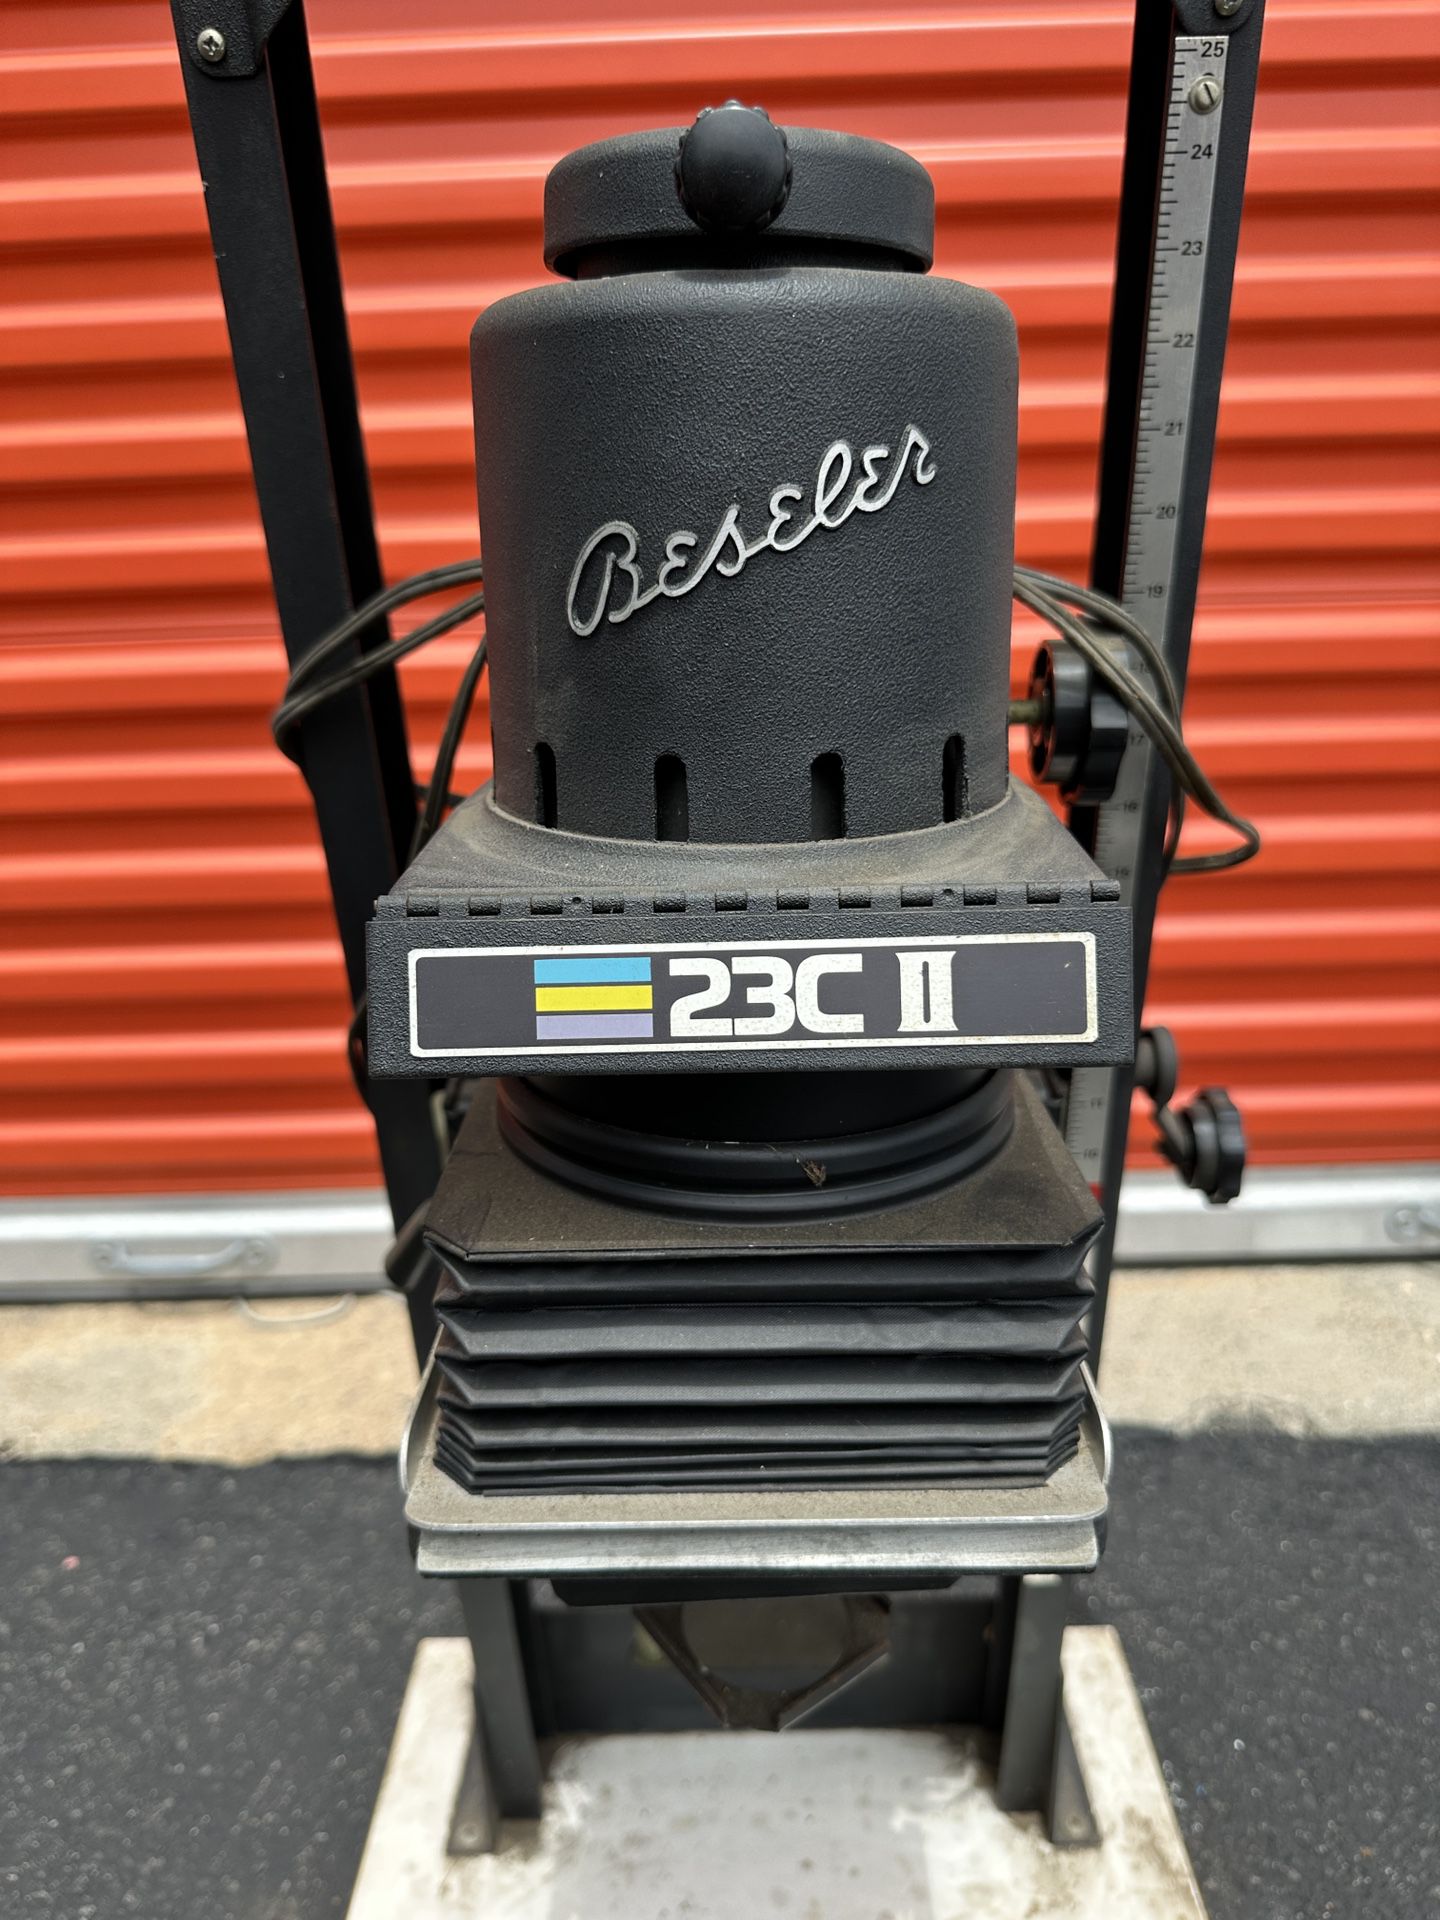 Beseler 23c ii Photography Equipment 